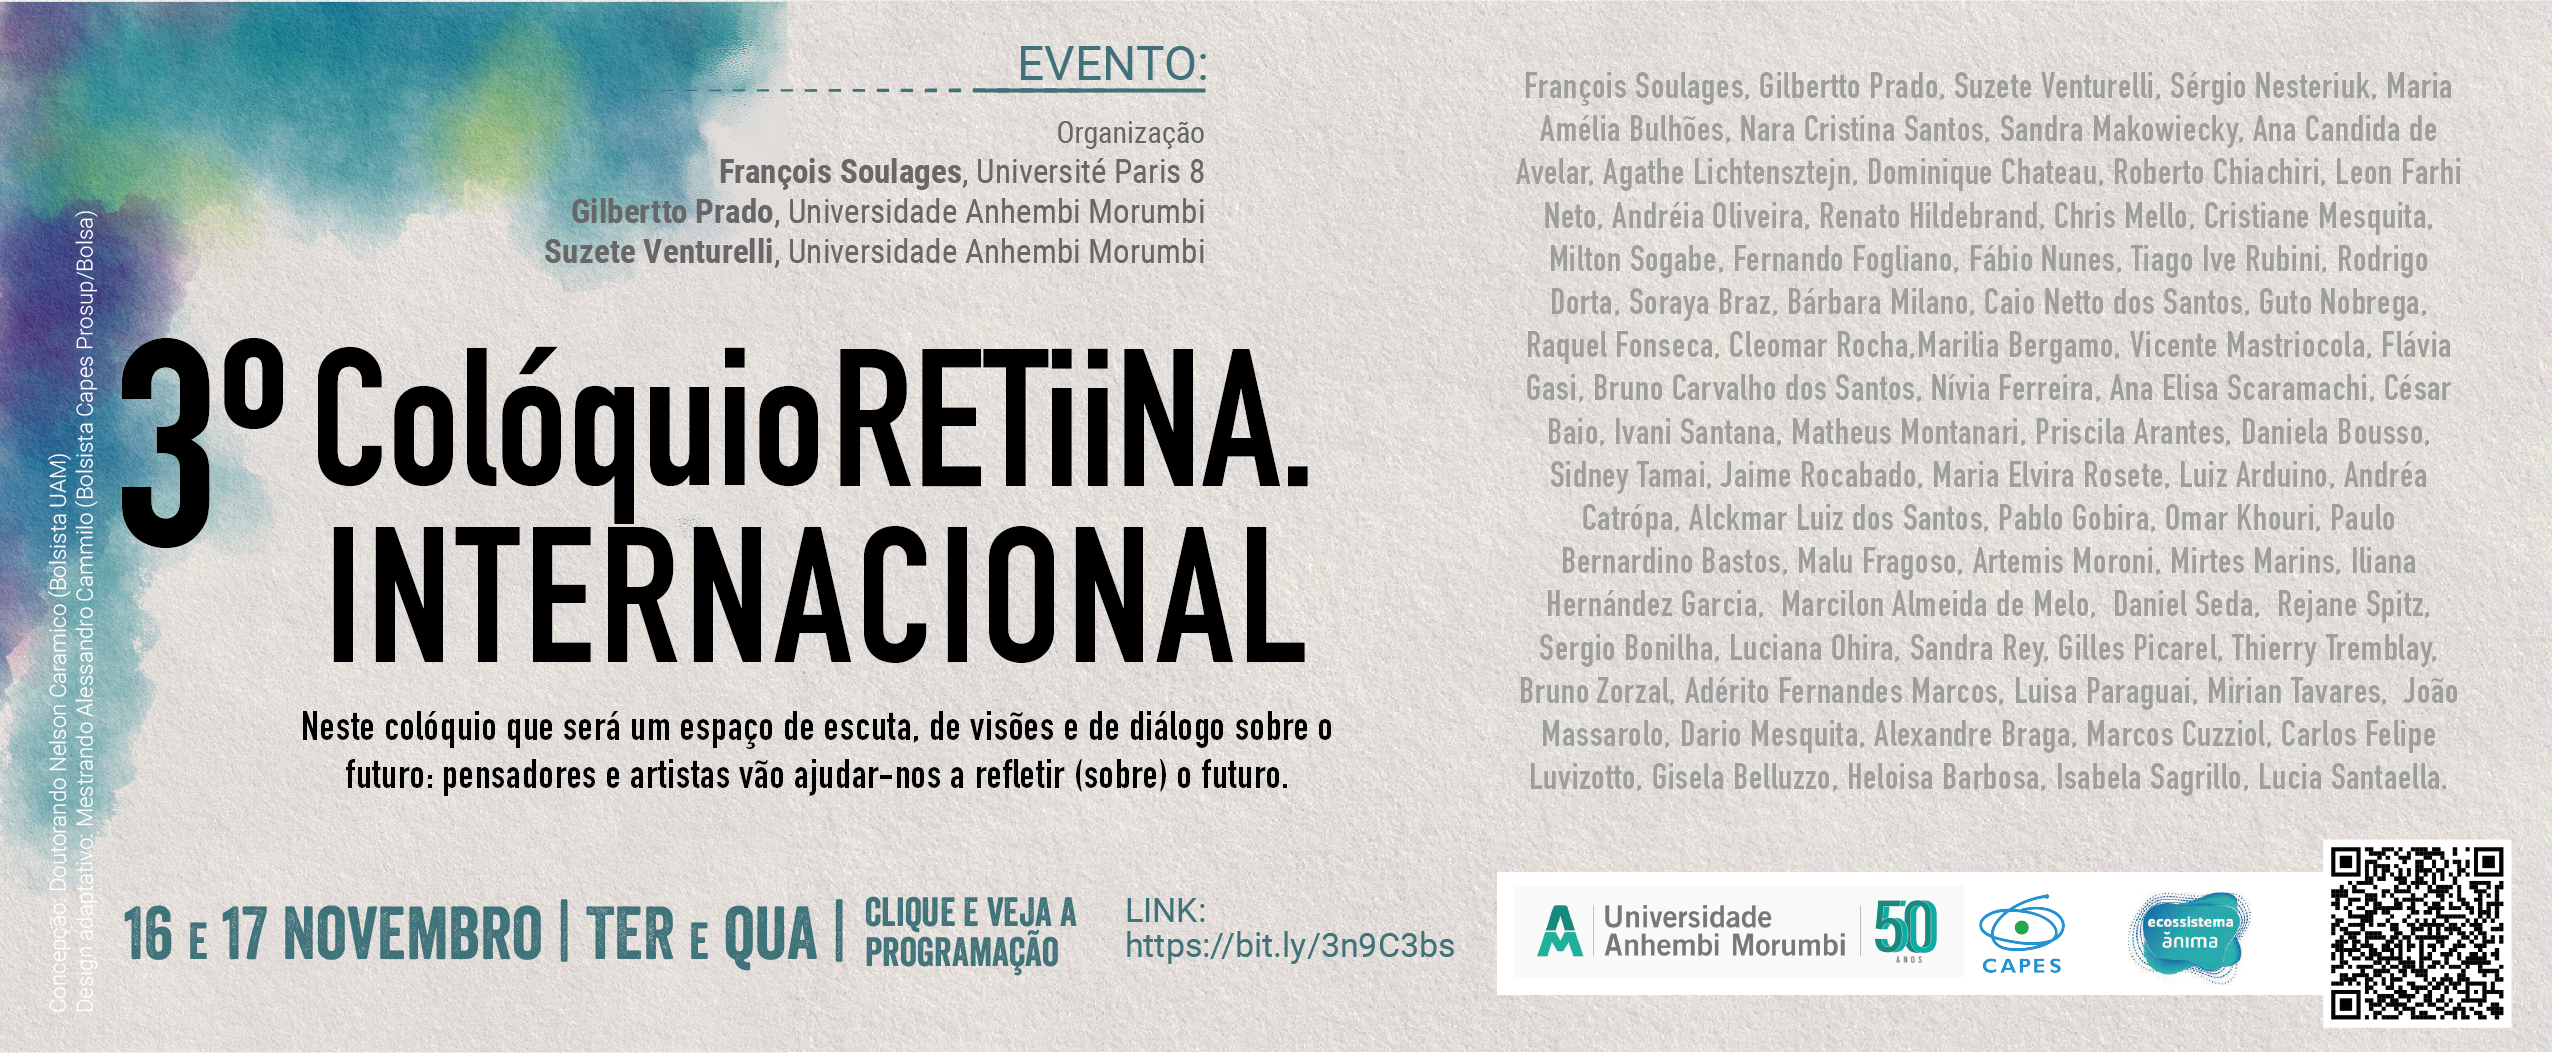 Banner - 3 coloquio Retiina Internacional